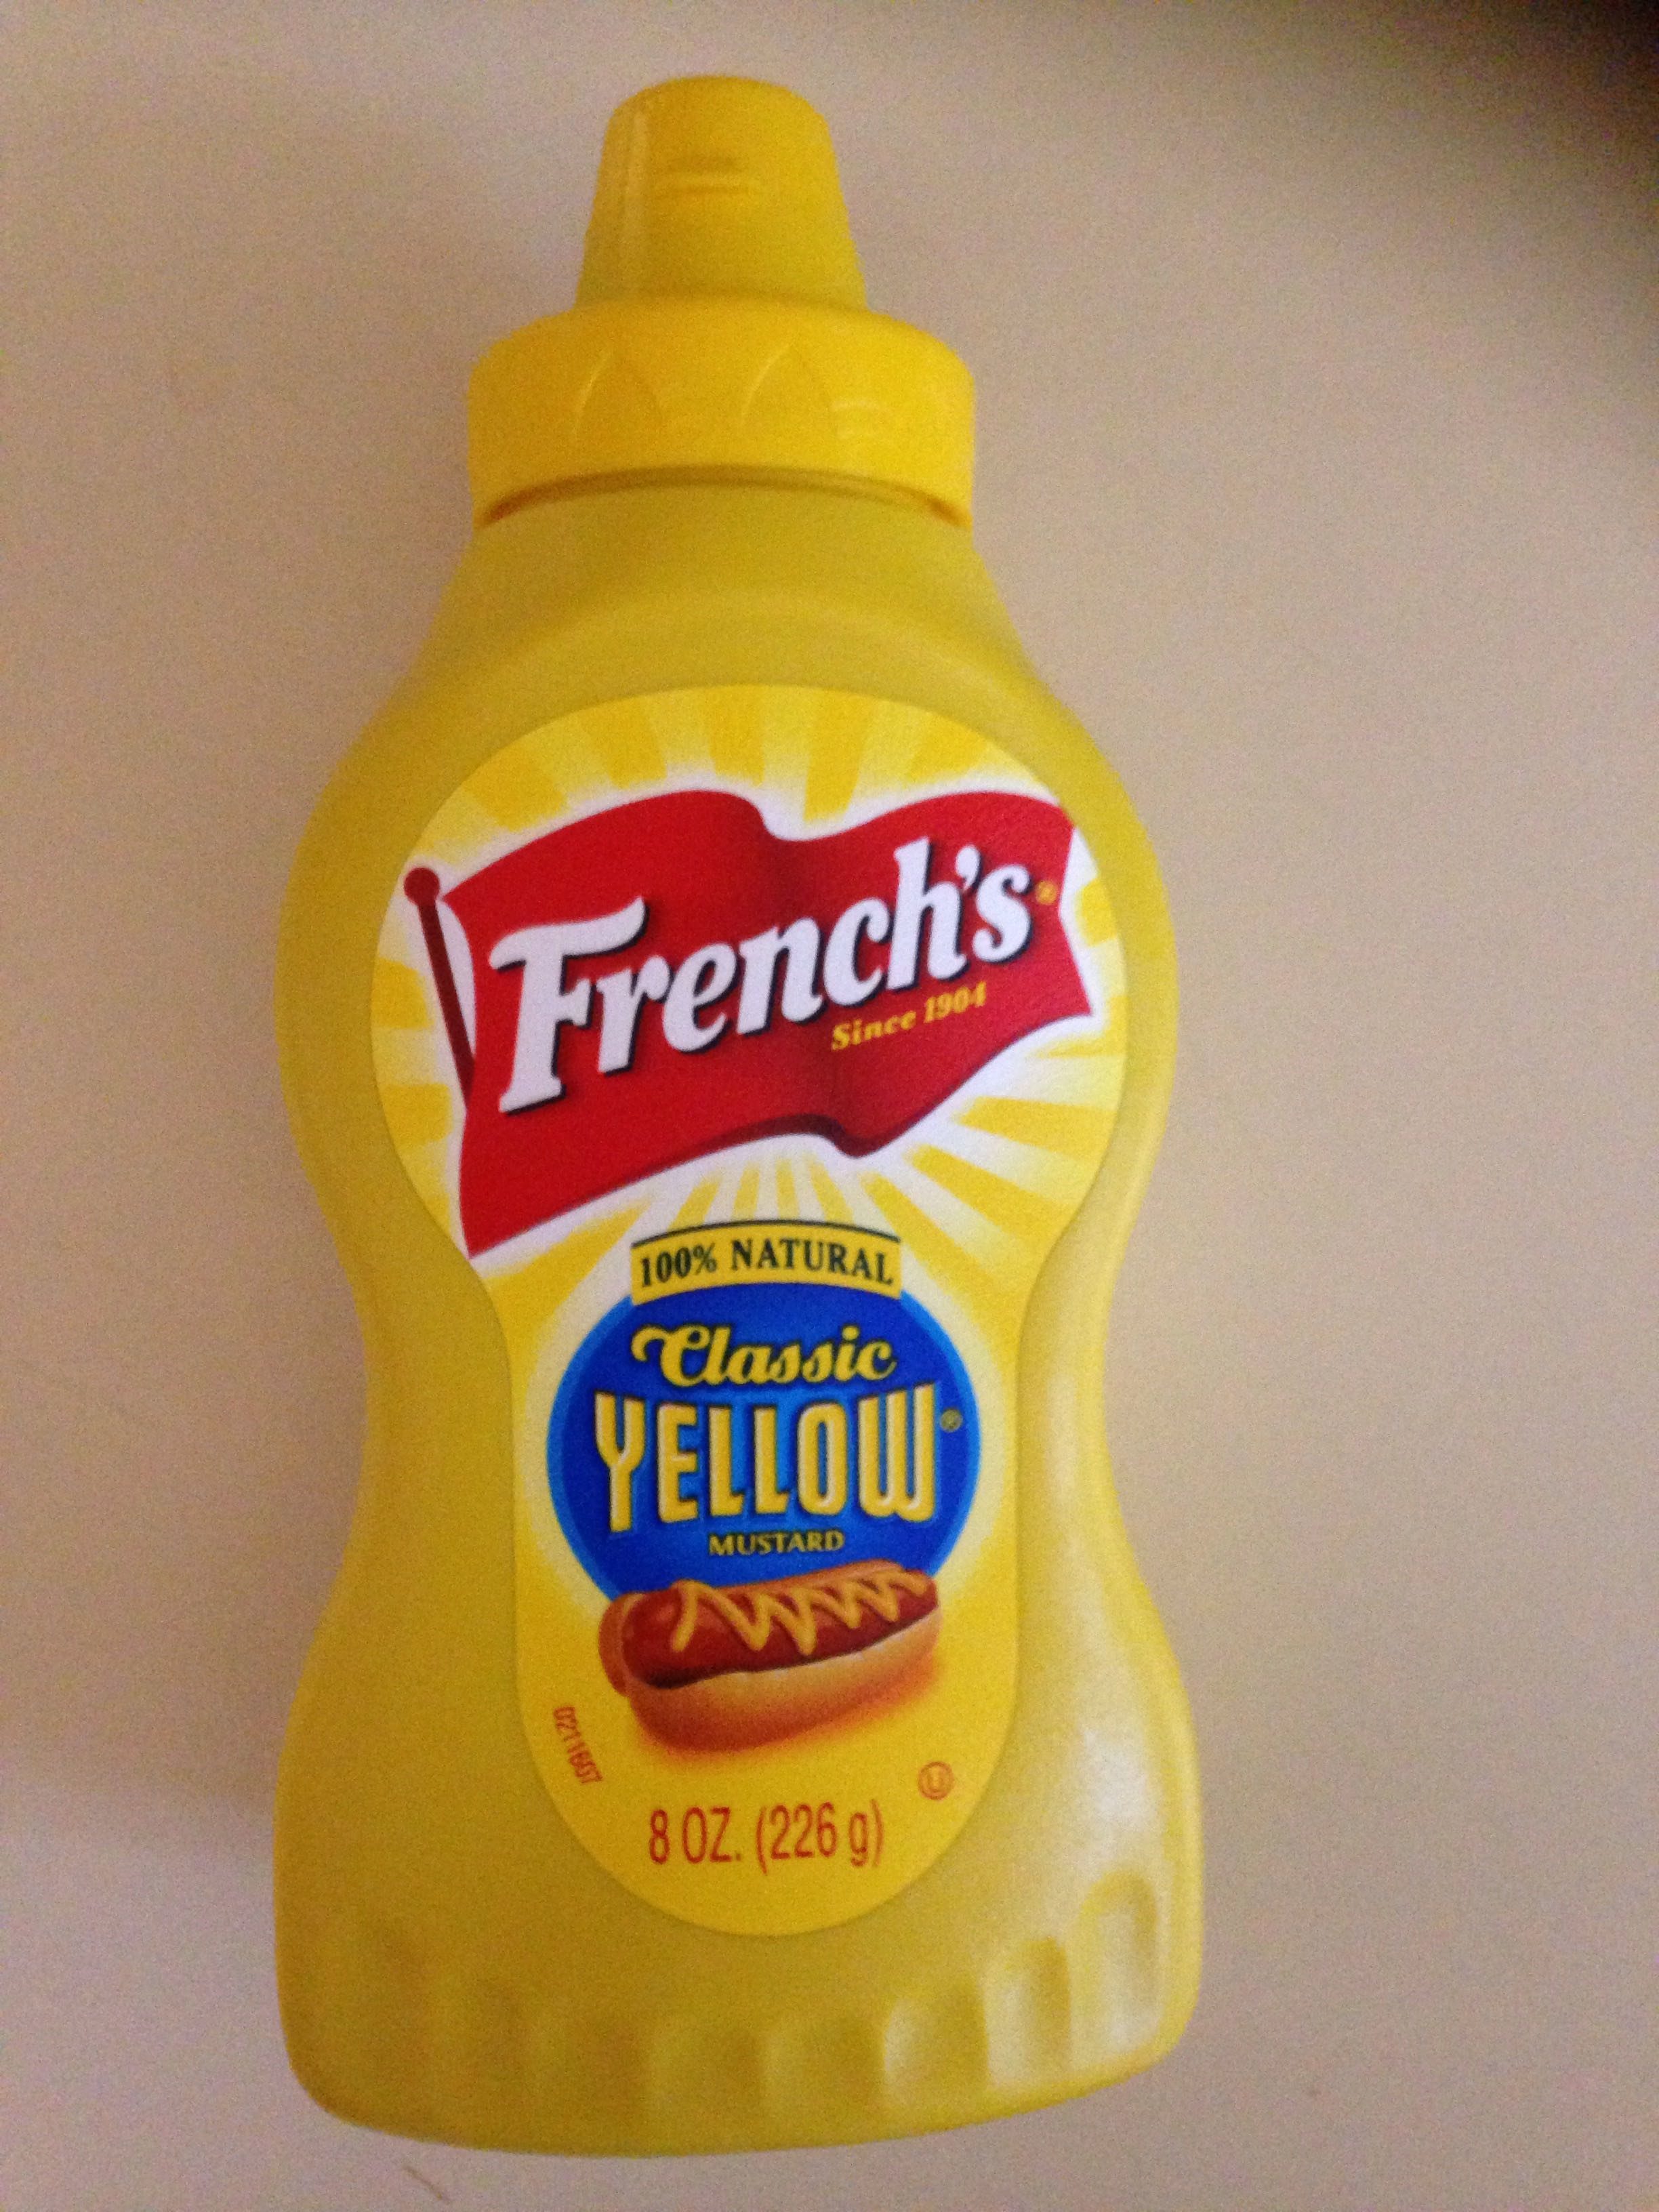 Classic yellow mustard, classic yellow - Produit - fr